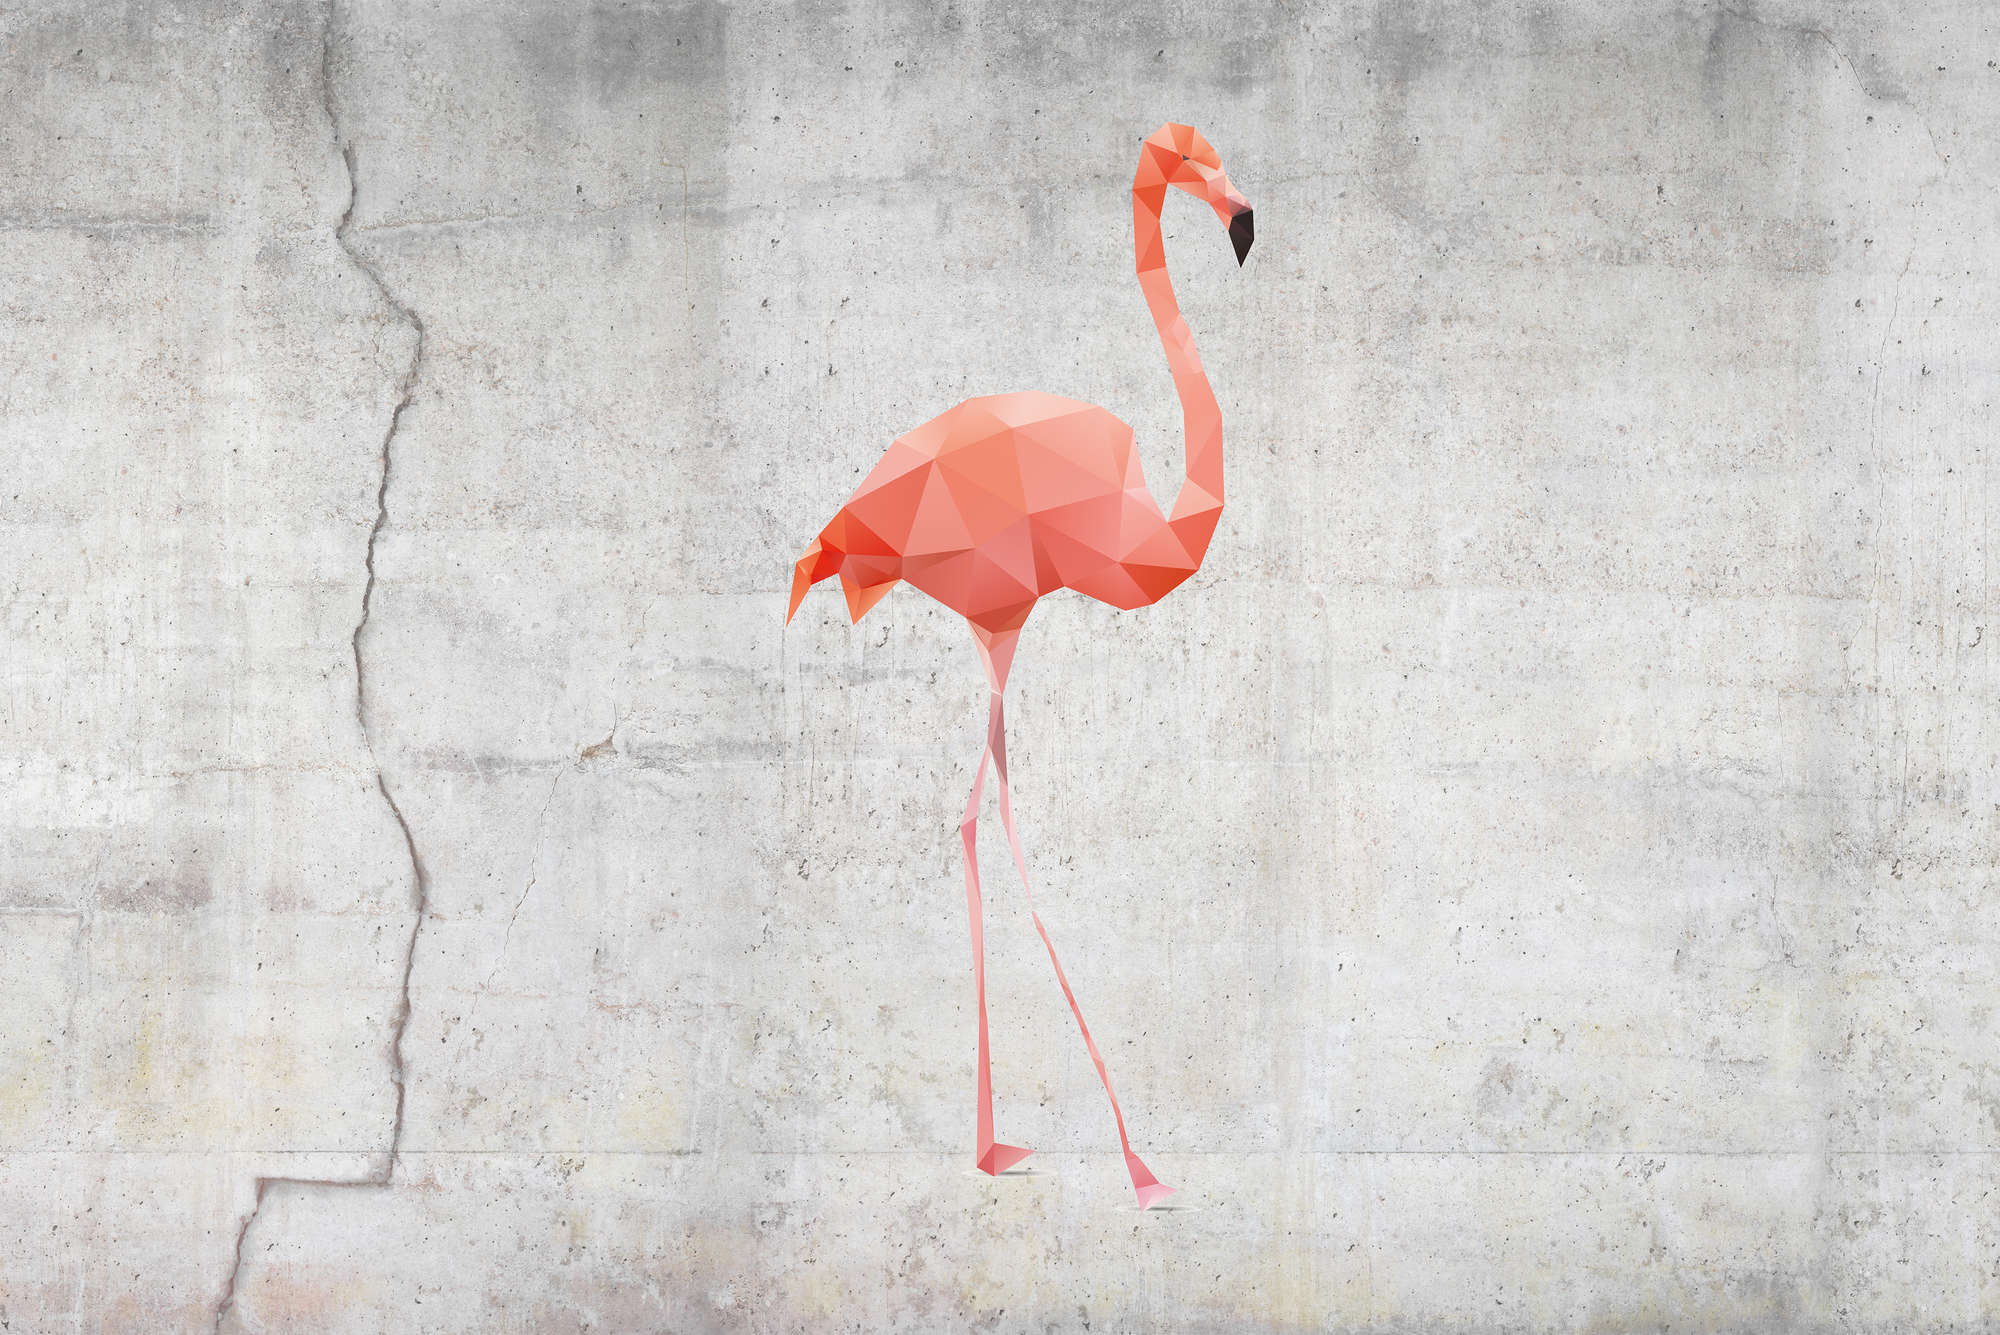             Graphic wall mural flamingo motif on premium smooth nonwoven
        